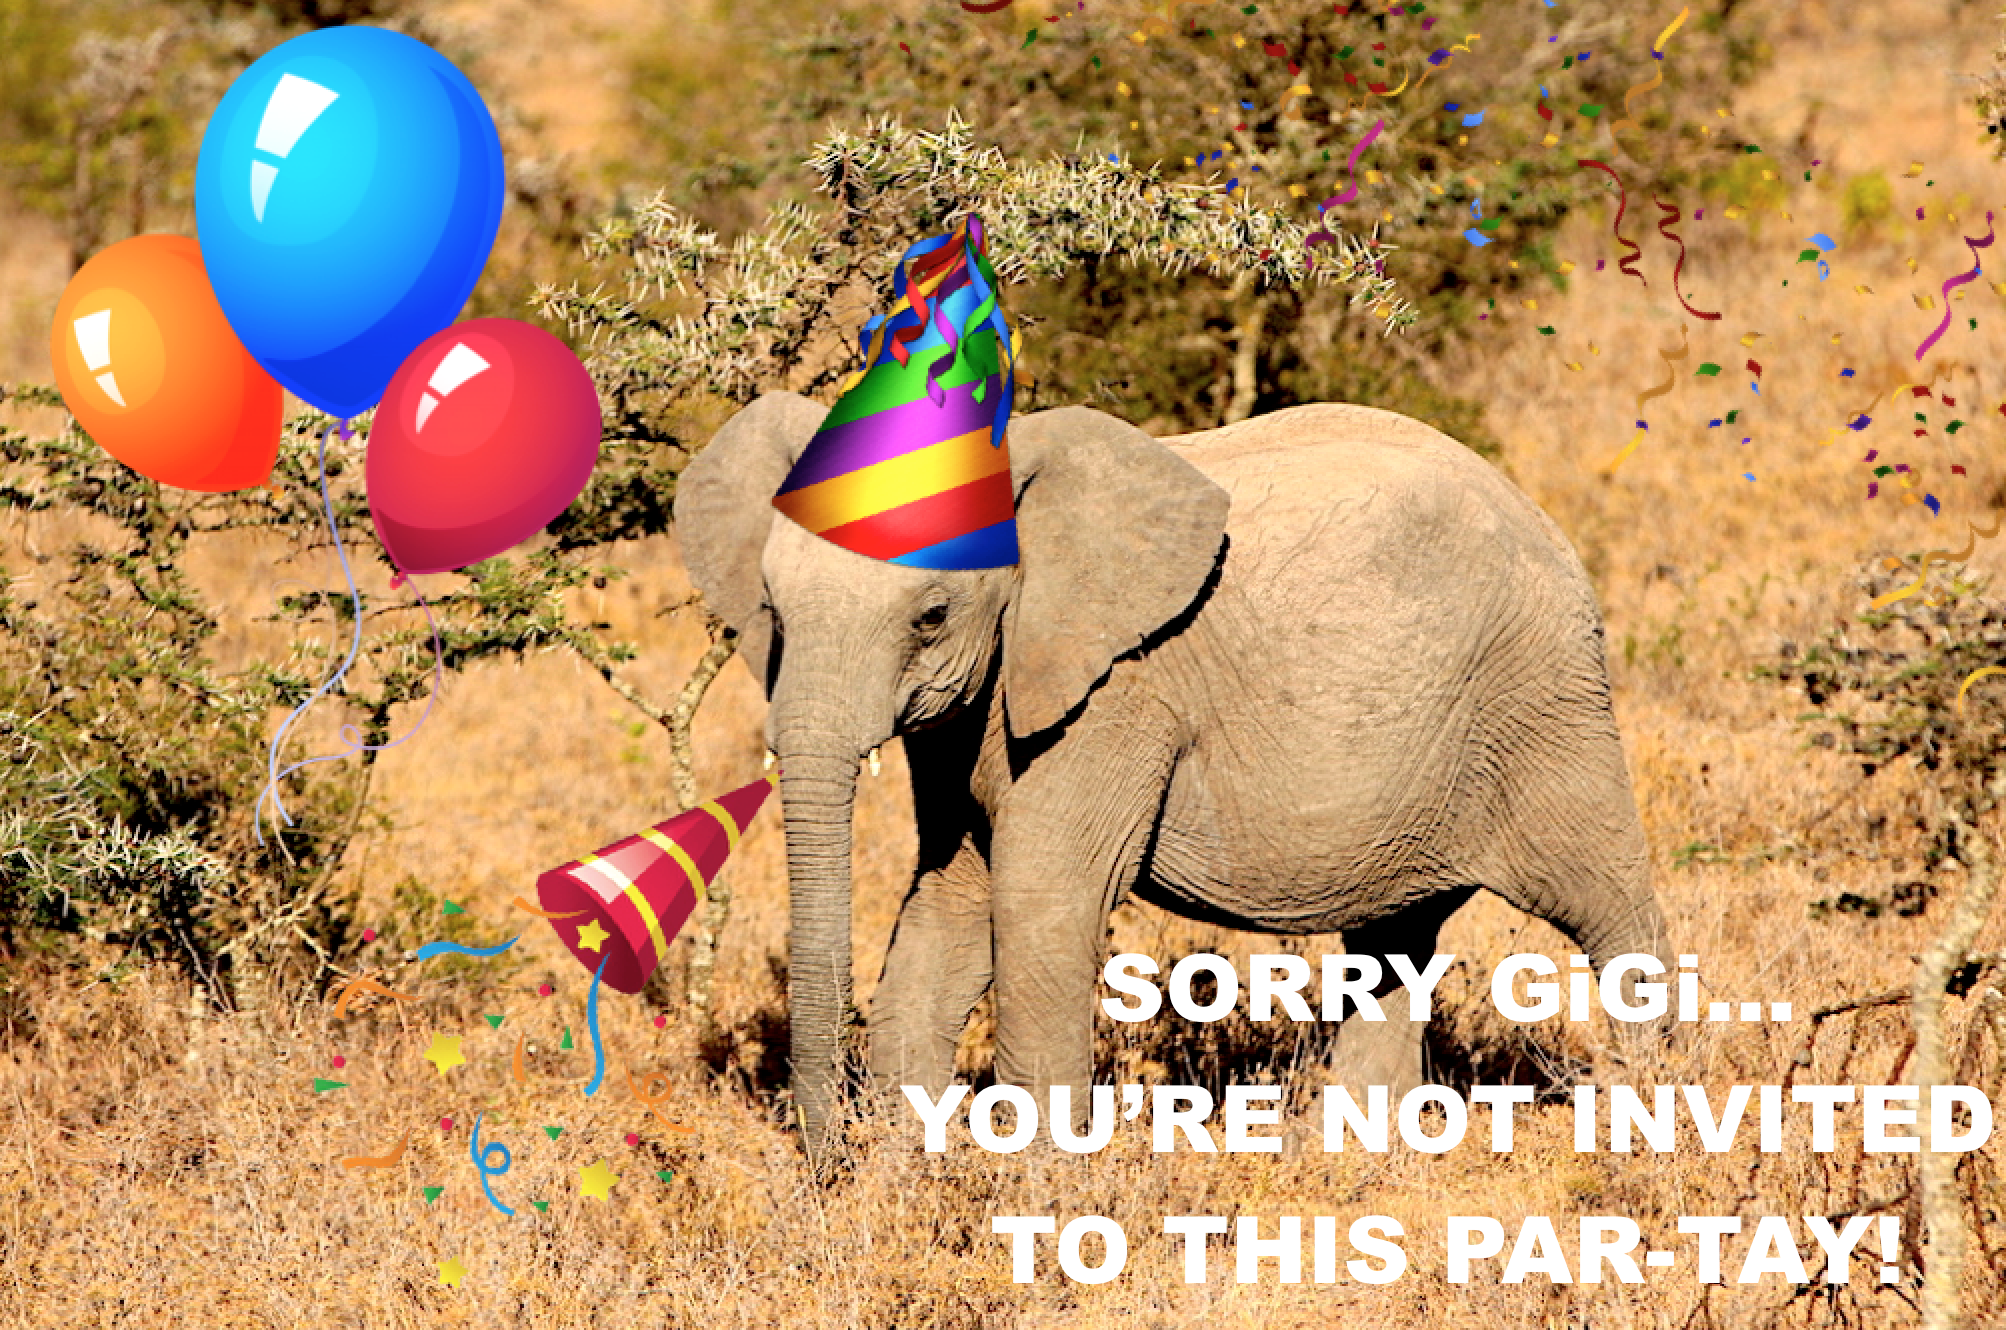 party elephant